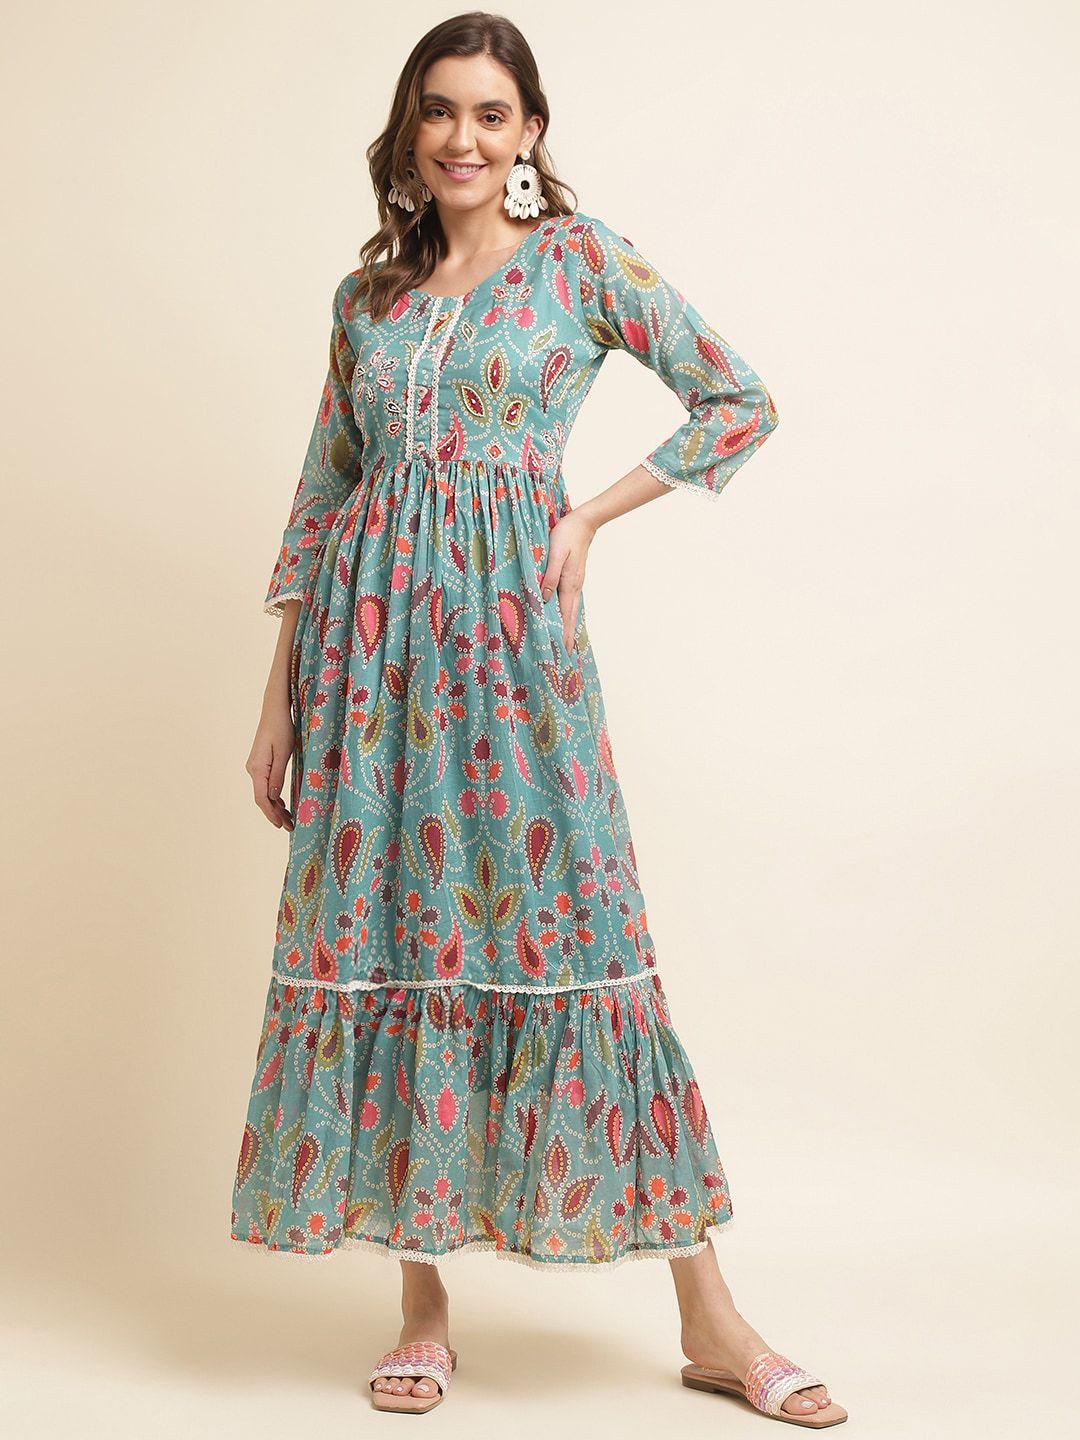 sangria floral printed embellished cotton fit & flare ethnic midi dress